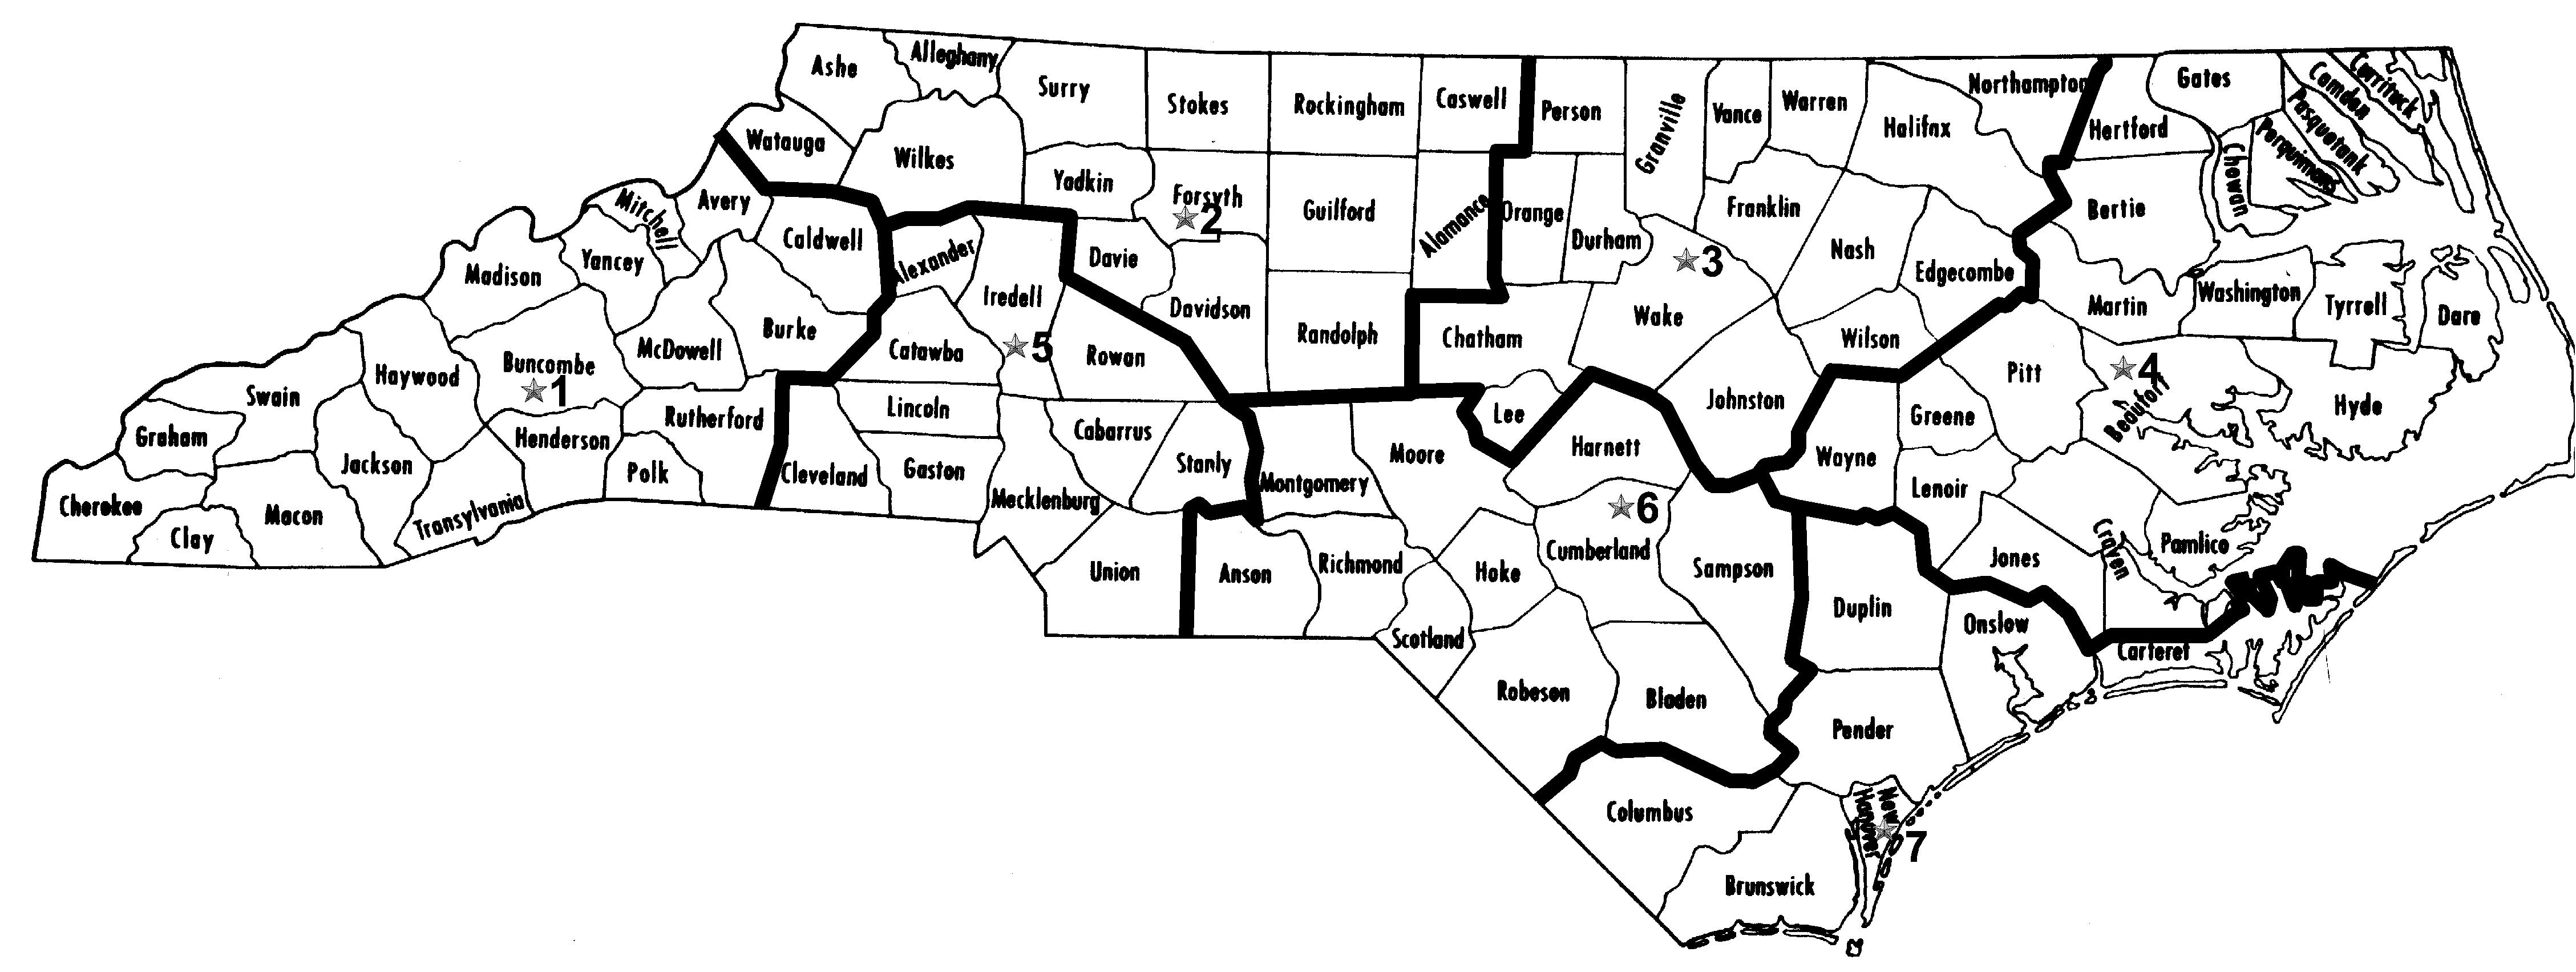 North Carolina County Map 11 